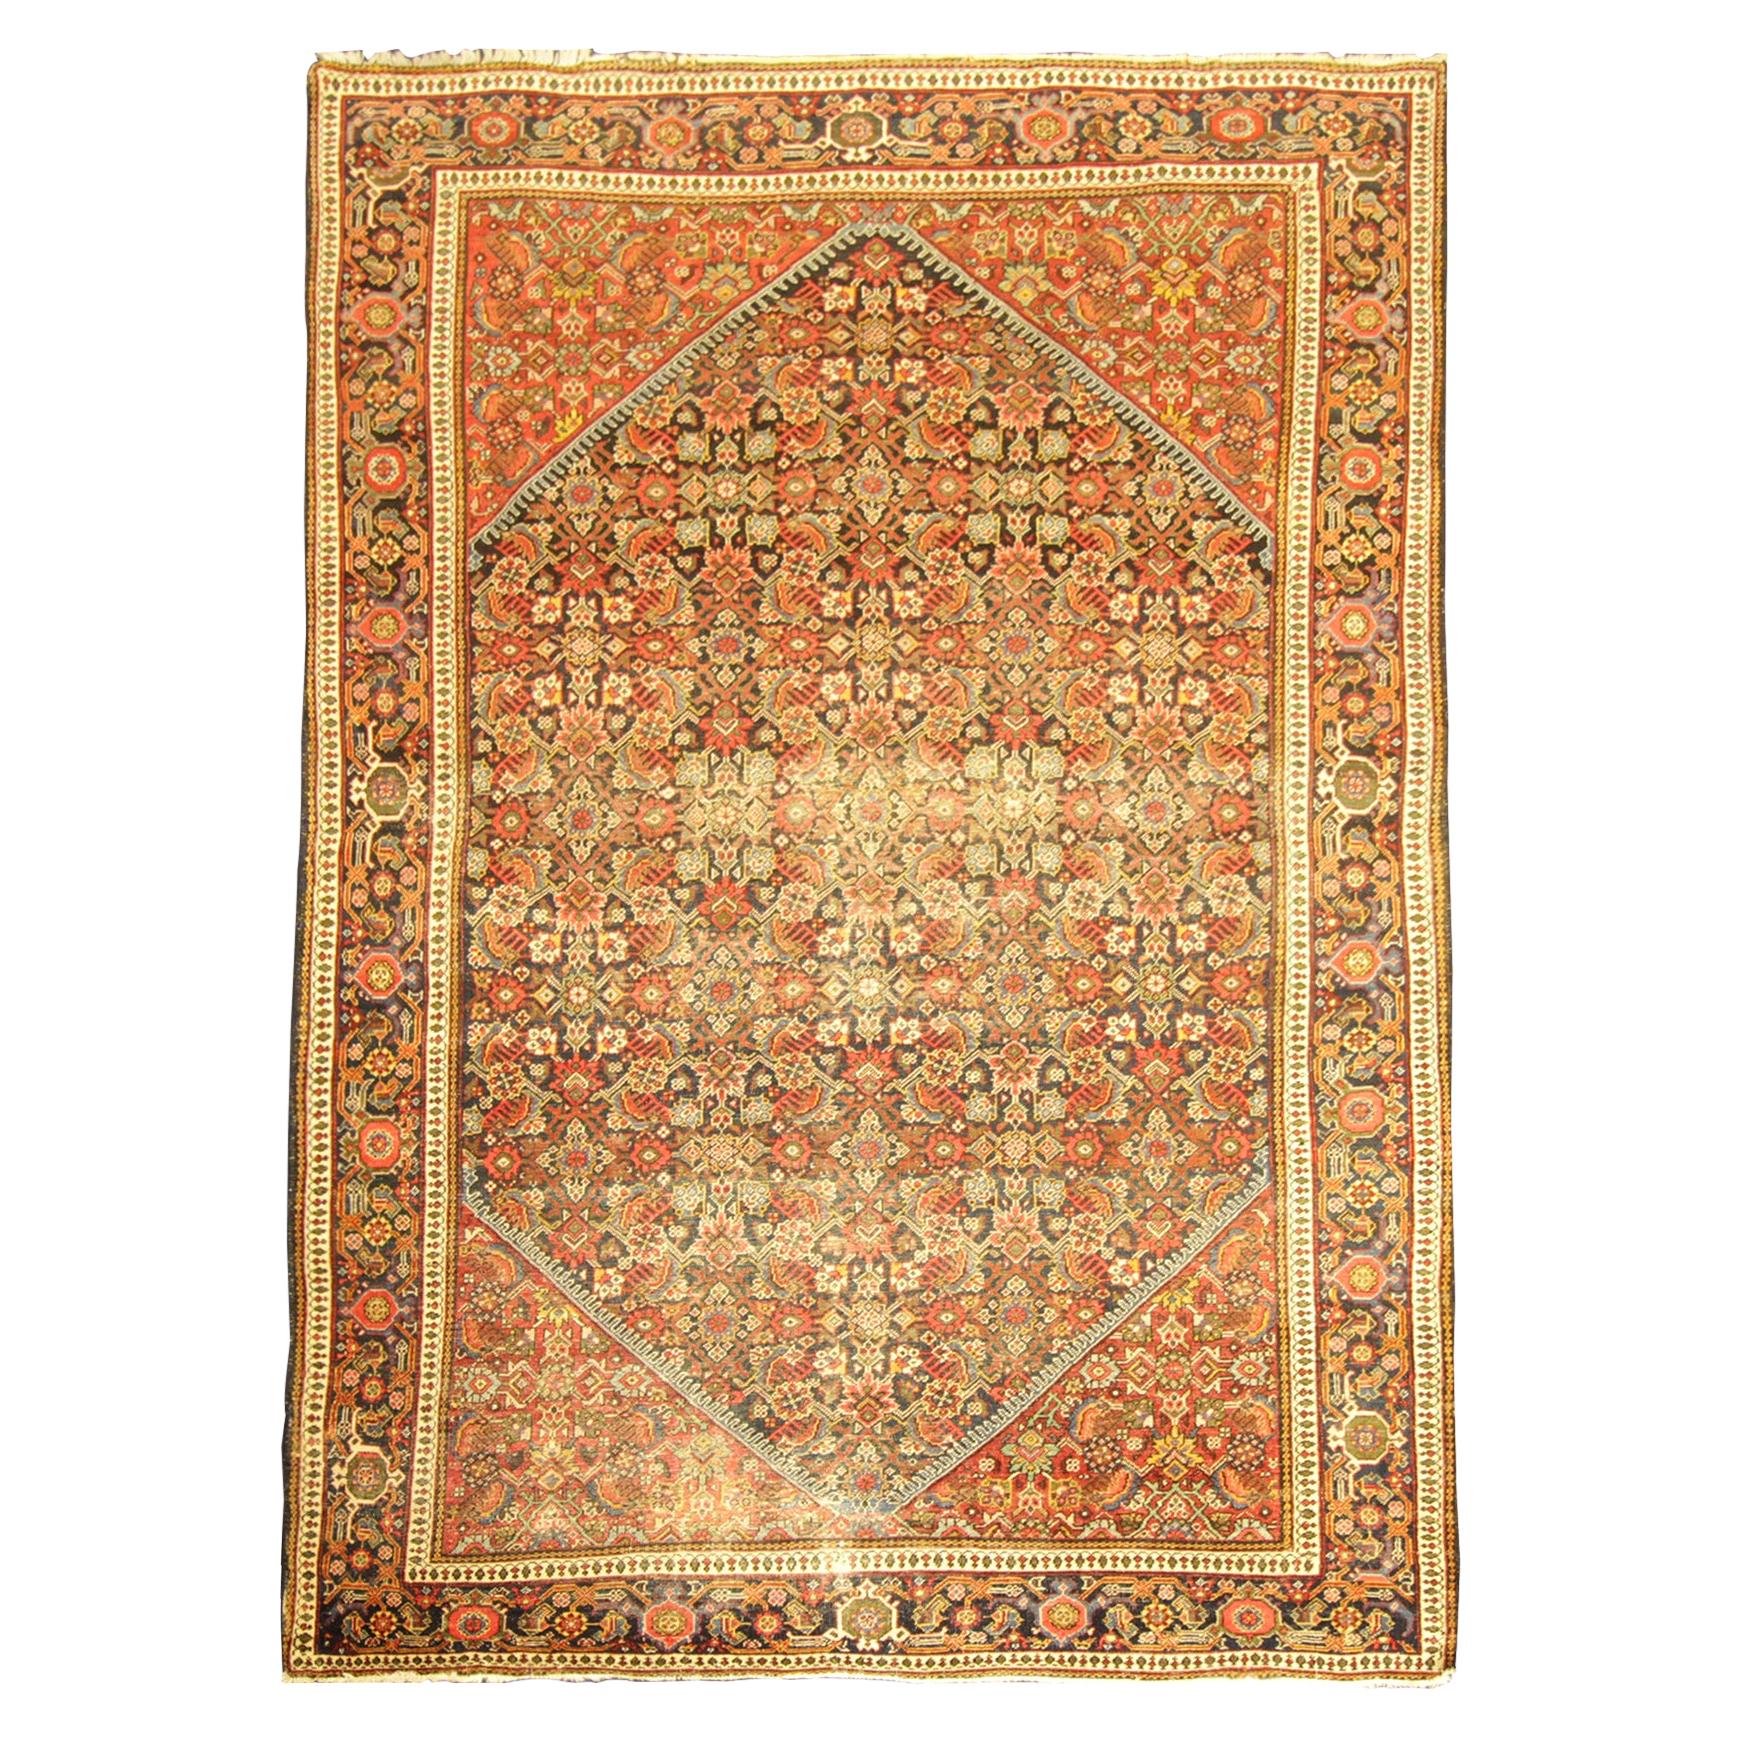 Handmade Oriental Antique Carpet, Orange Wool Area Rug For Sale